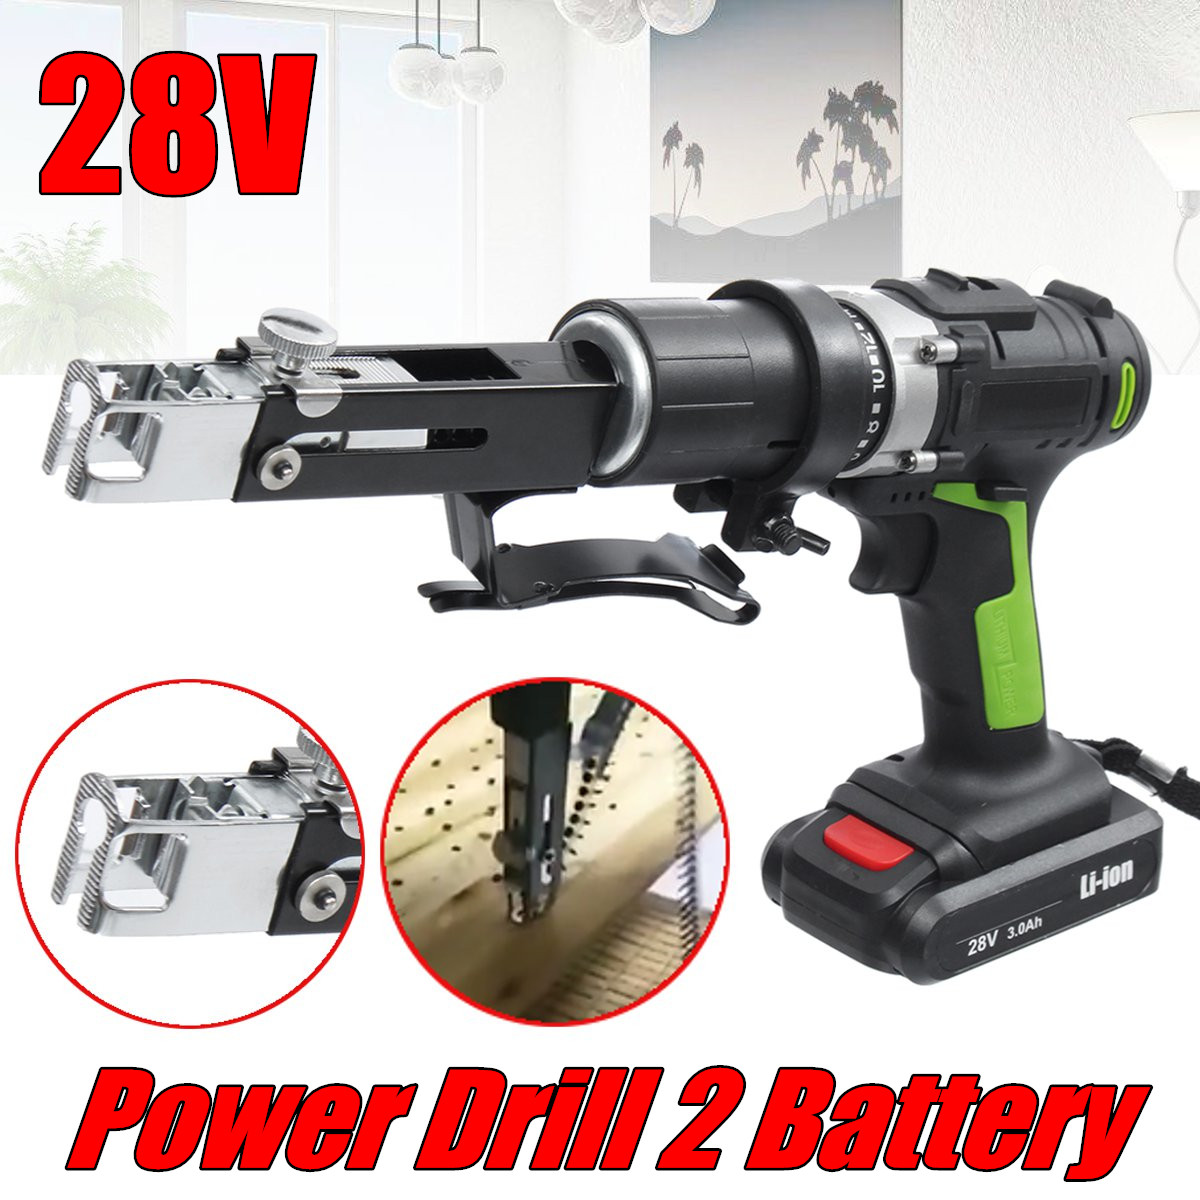 28V-Electric-Chain-Drill-Power-Drills-Chain-Gun-Rechargable-Elecreic-Drill-2-Batteries-1-Charger-1318858-1